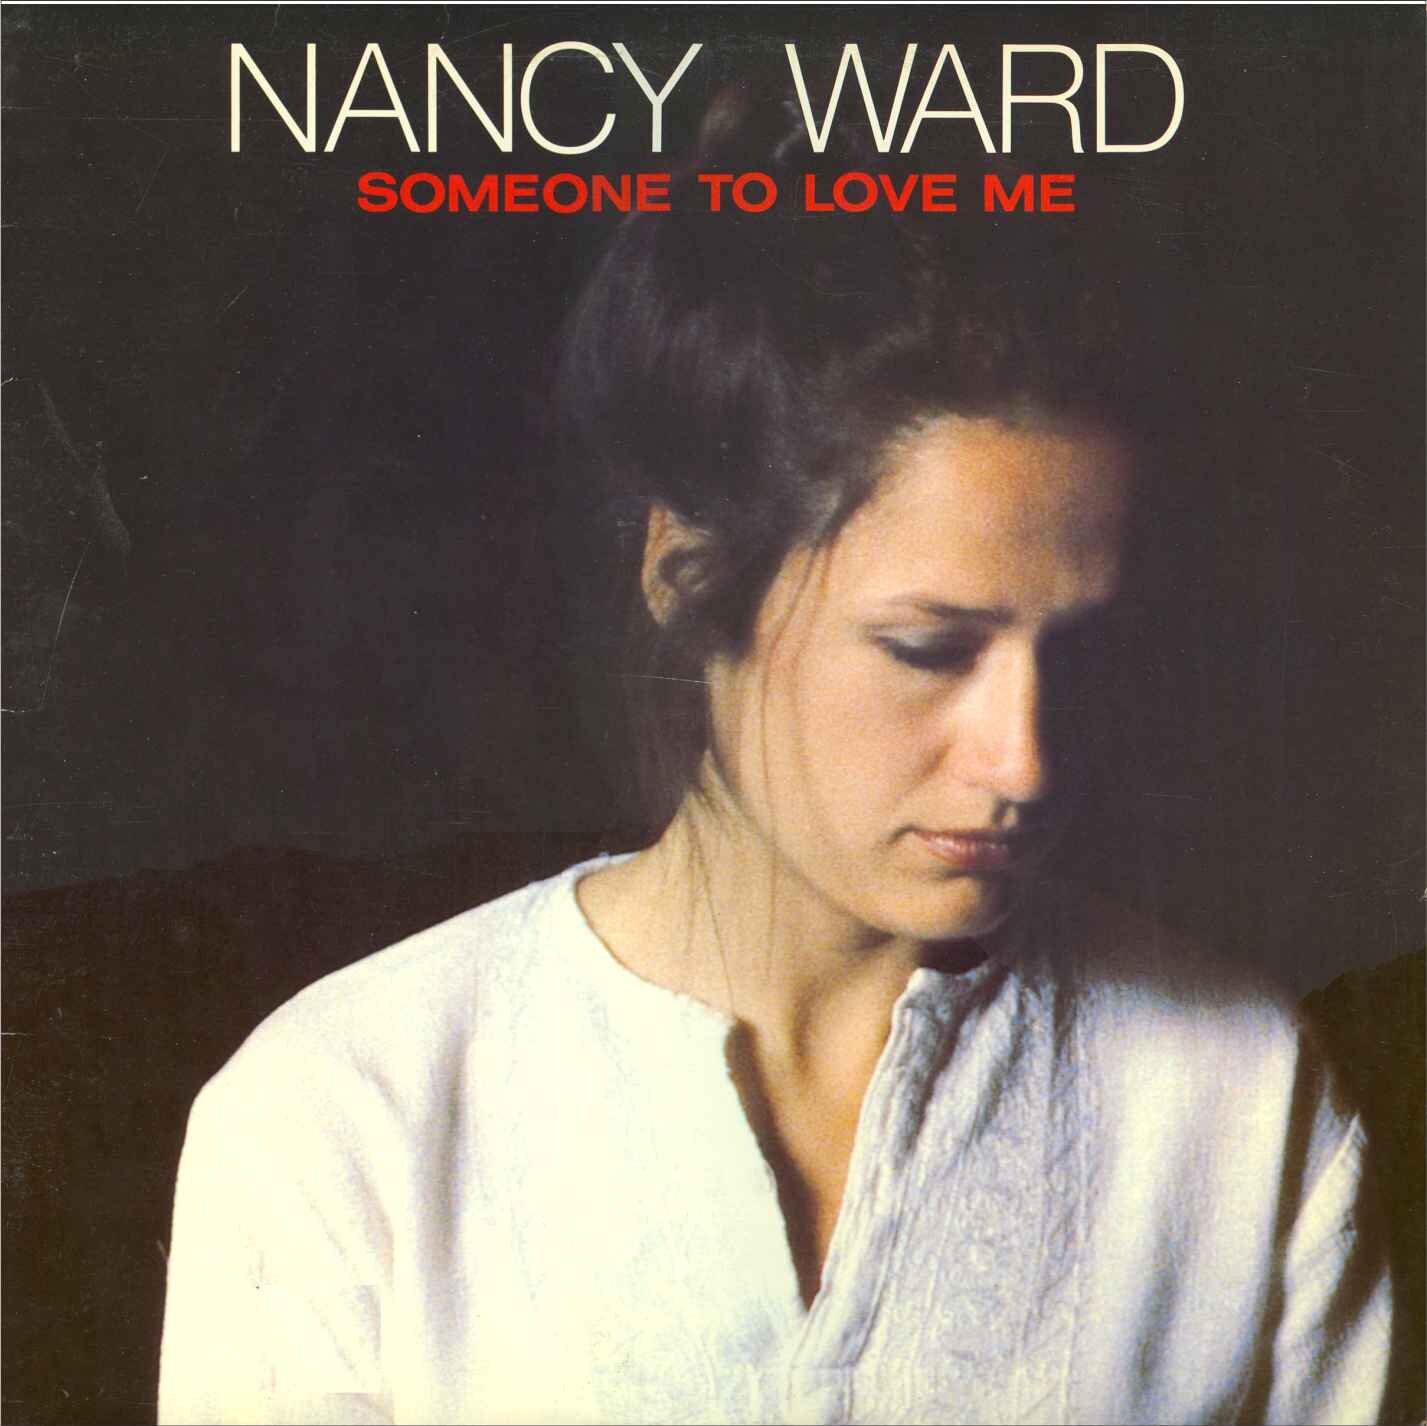 1980-Nancy Ward, Someone to love me_Arrangements.jpg